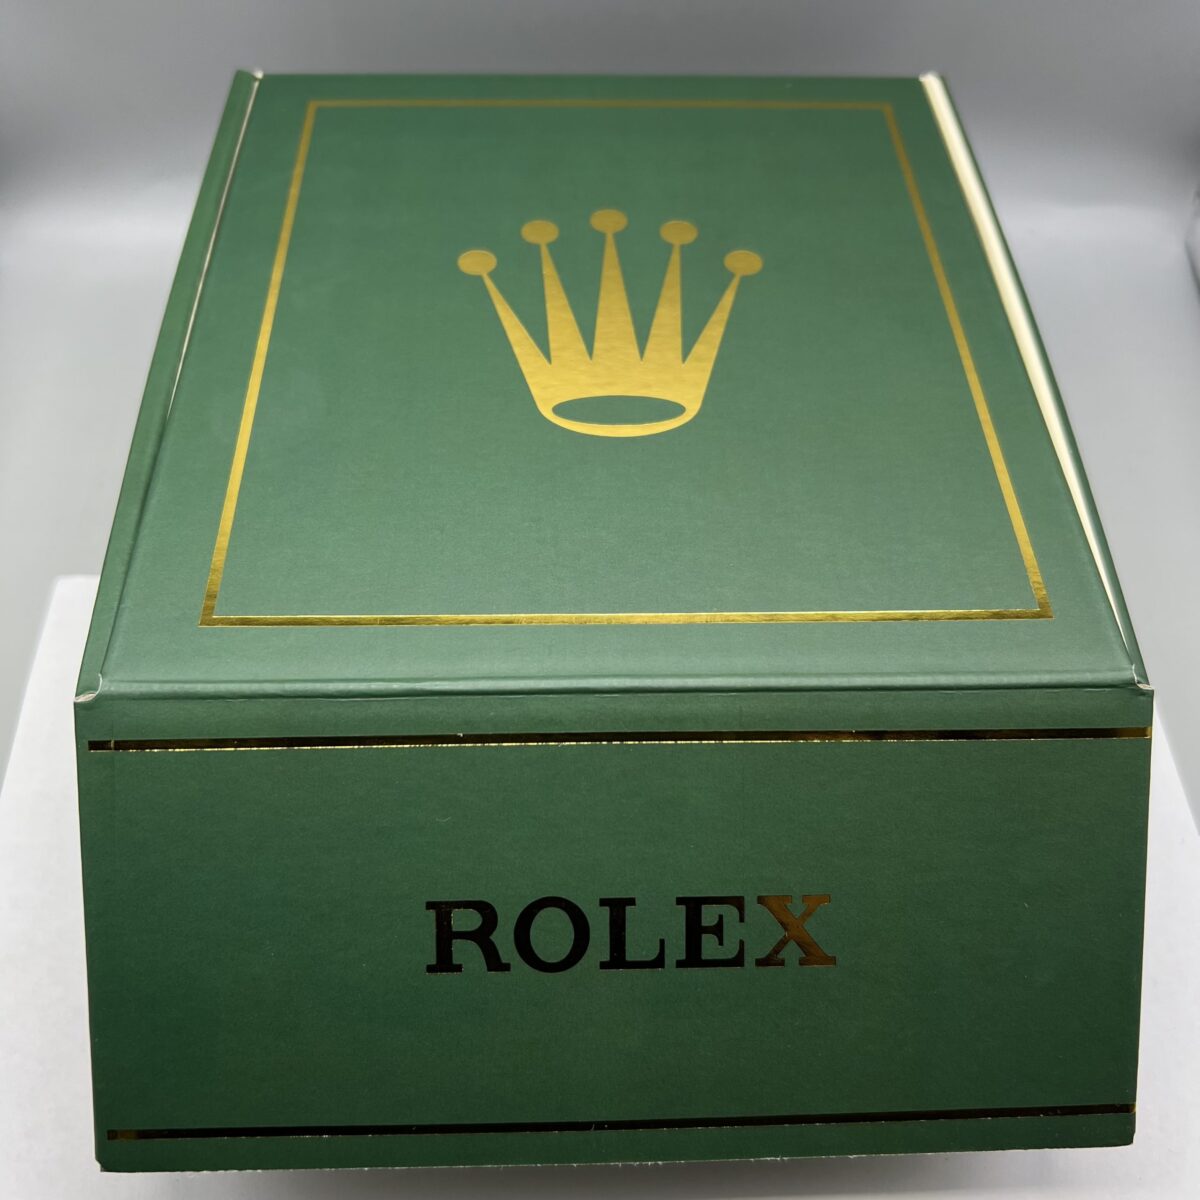 Rolex Shatter Pound box 1 1 scaled 1